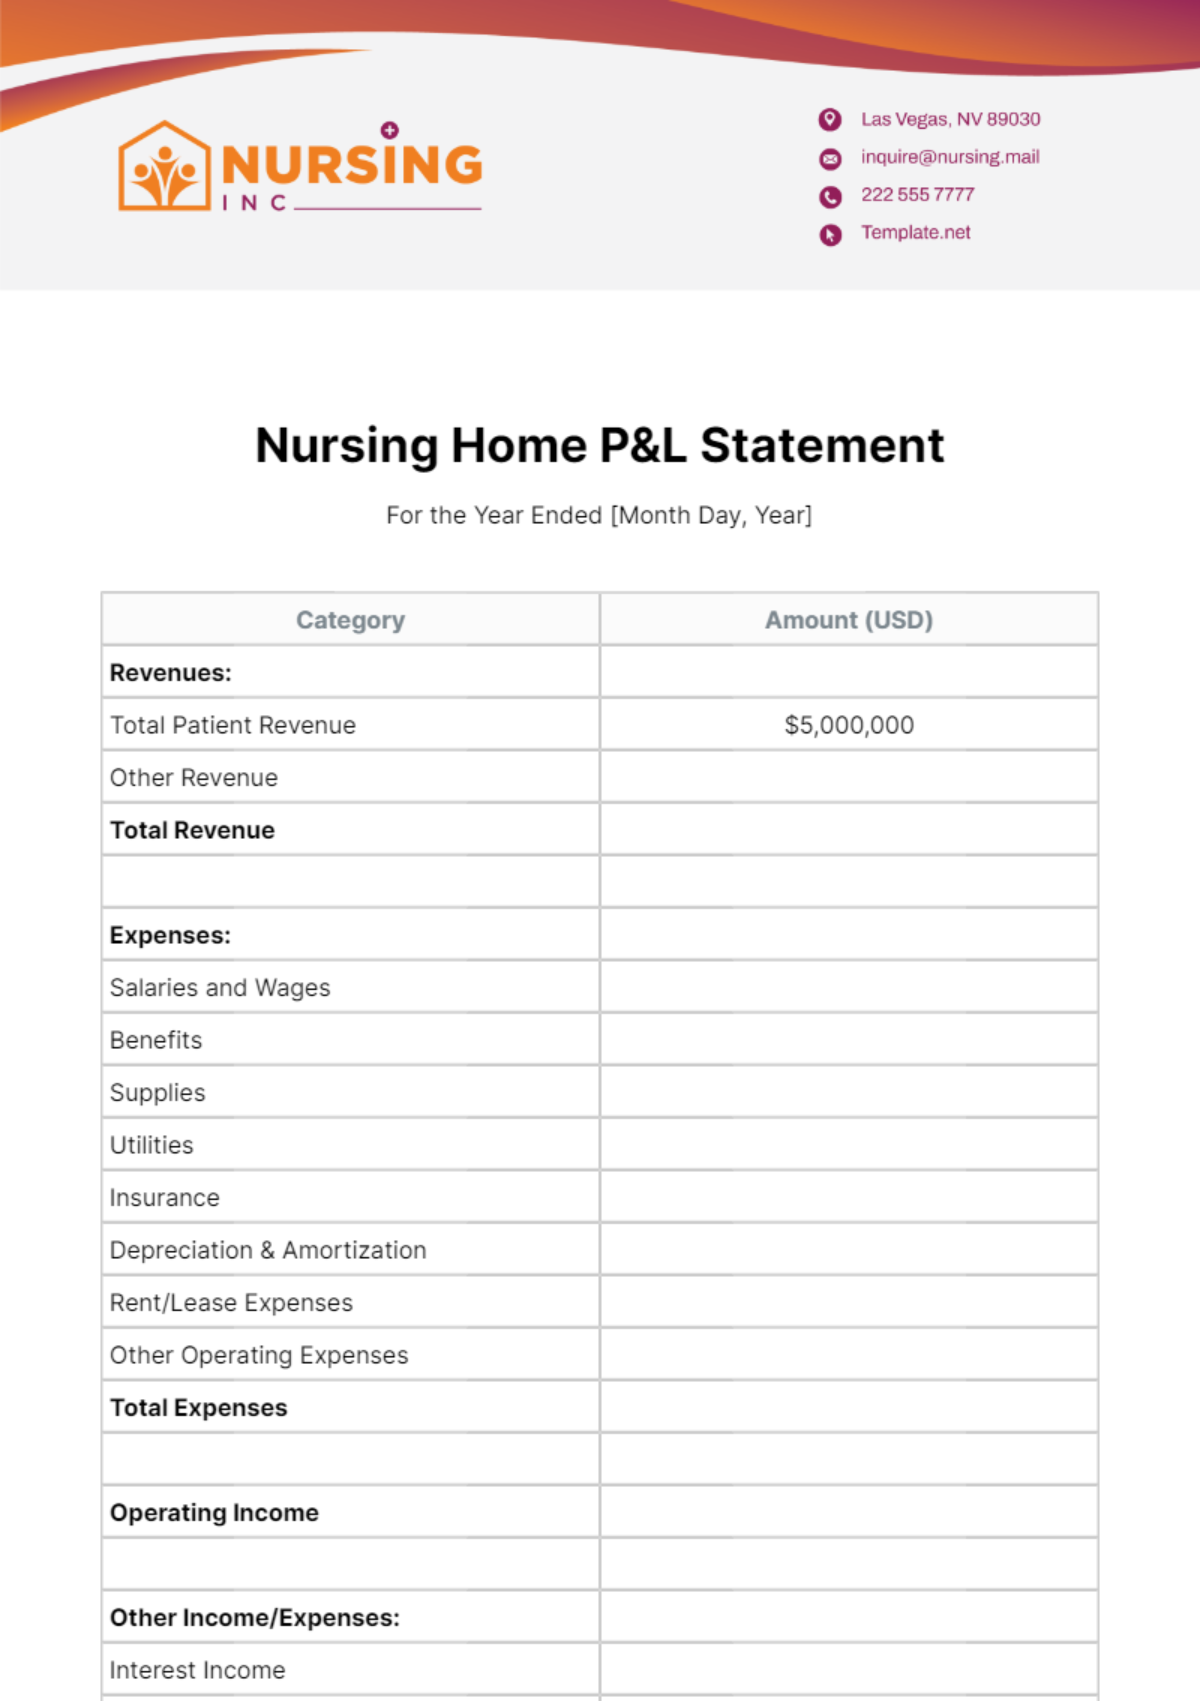 Nursing Home P&L Statement Template